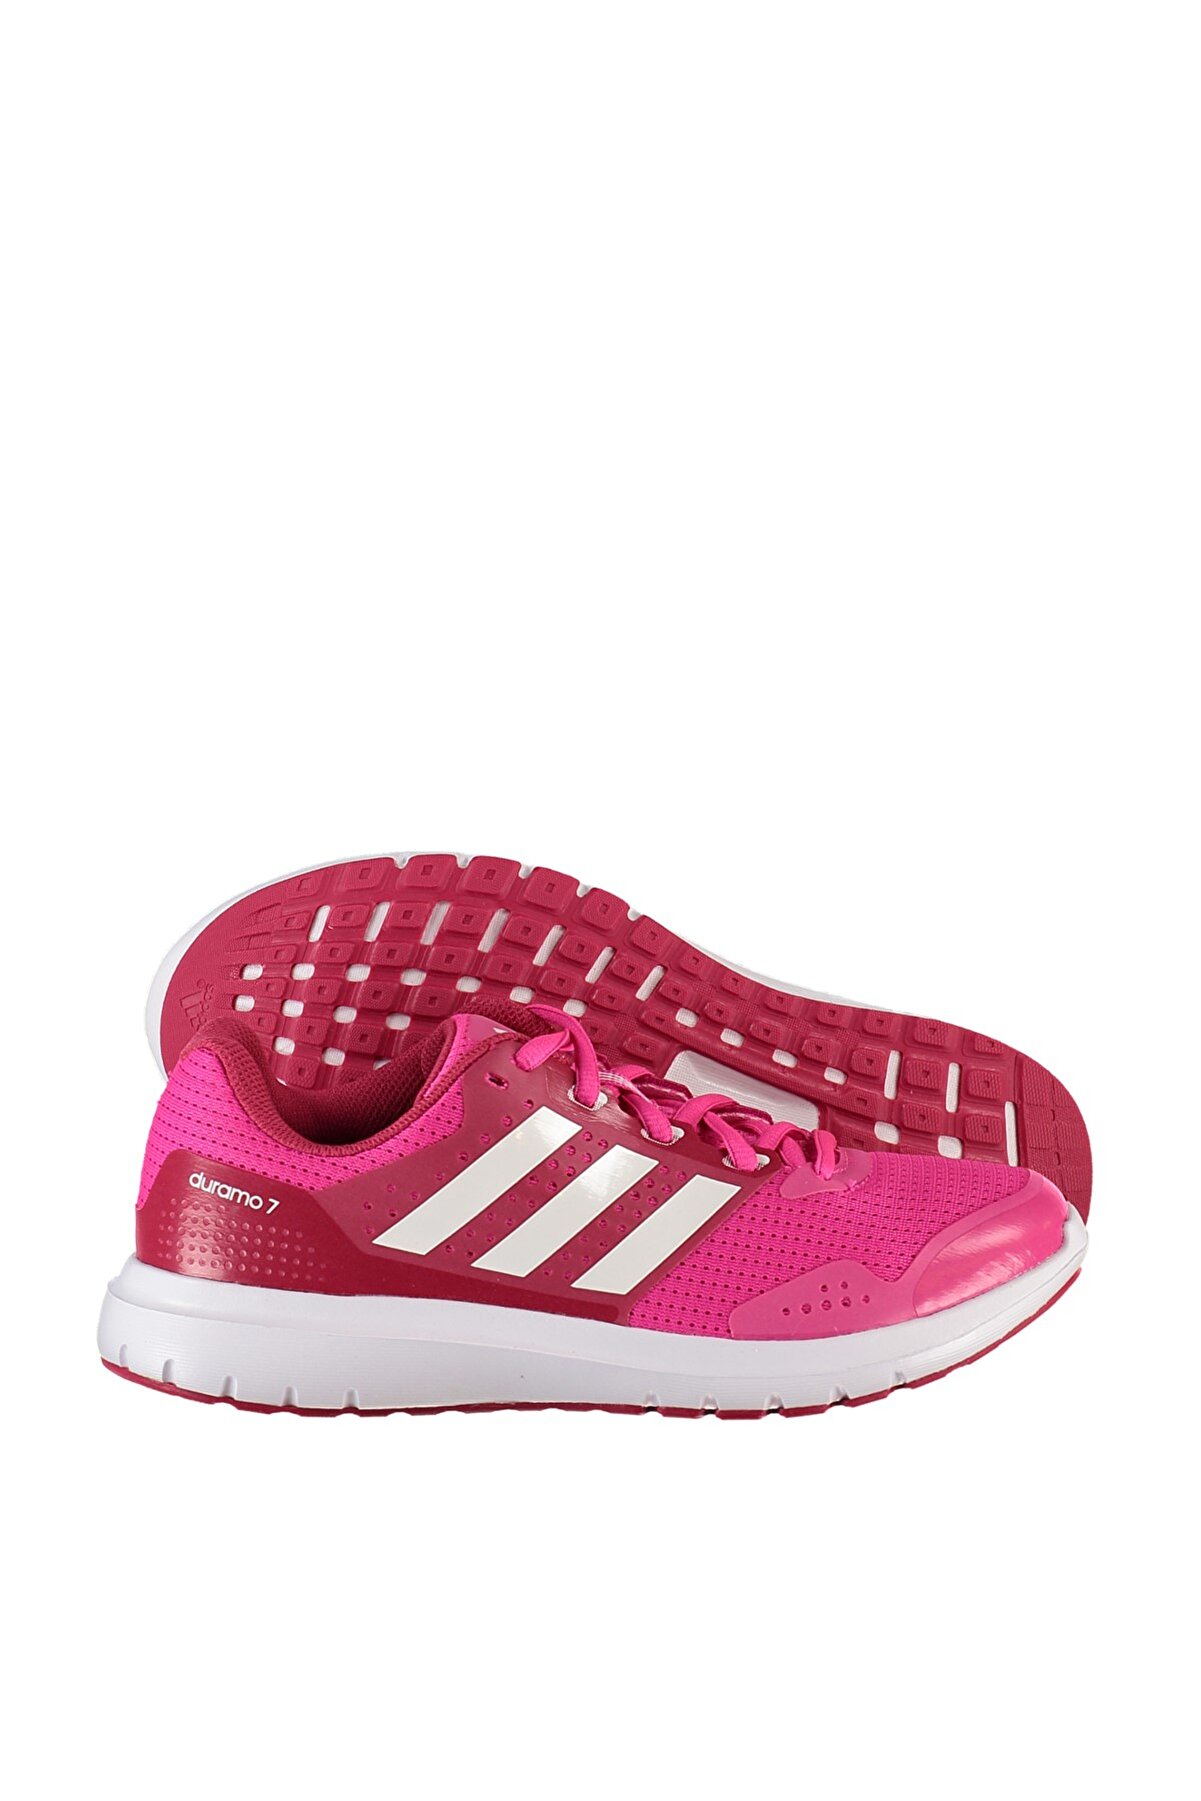 adidas Kadın Koşu Ayakkabı - Duramo 7 w - AQ6502